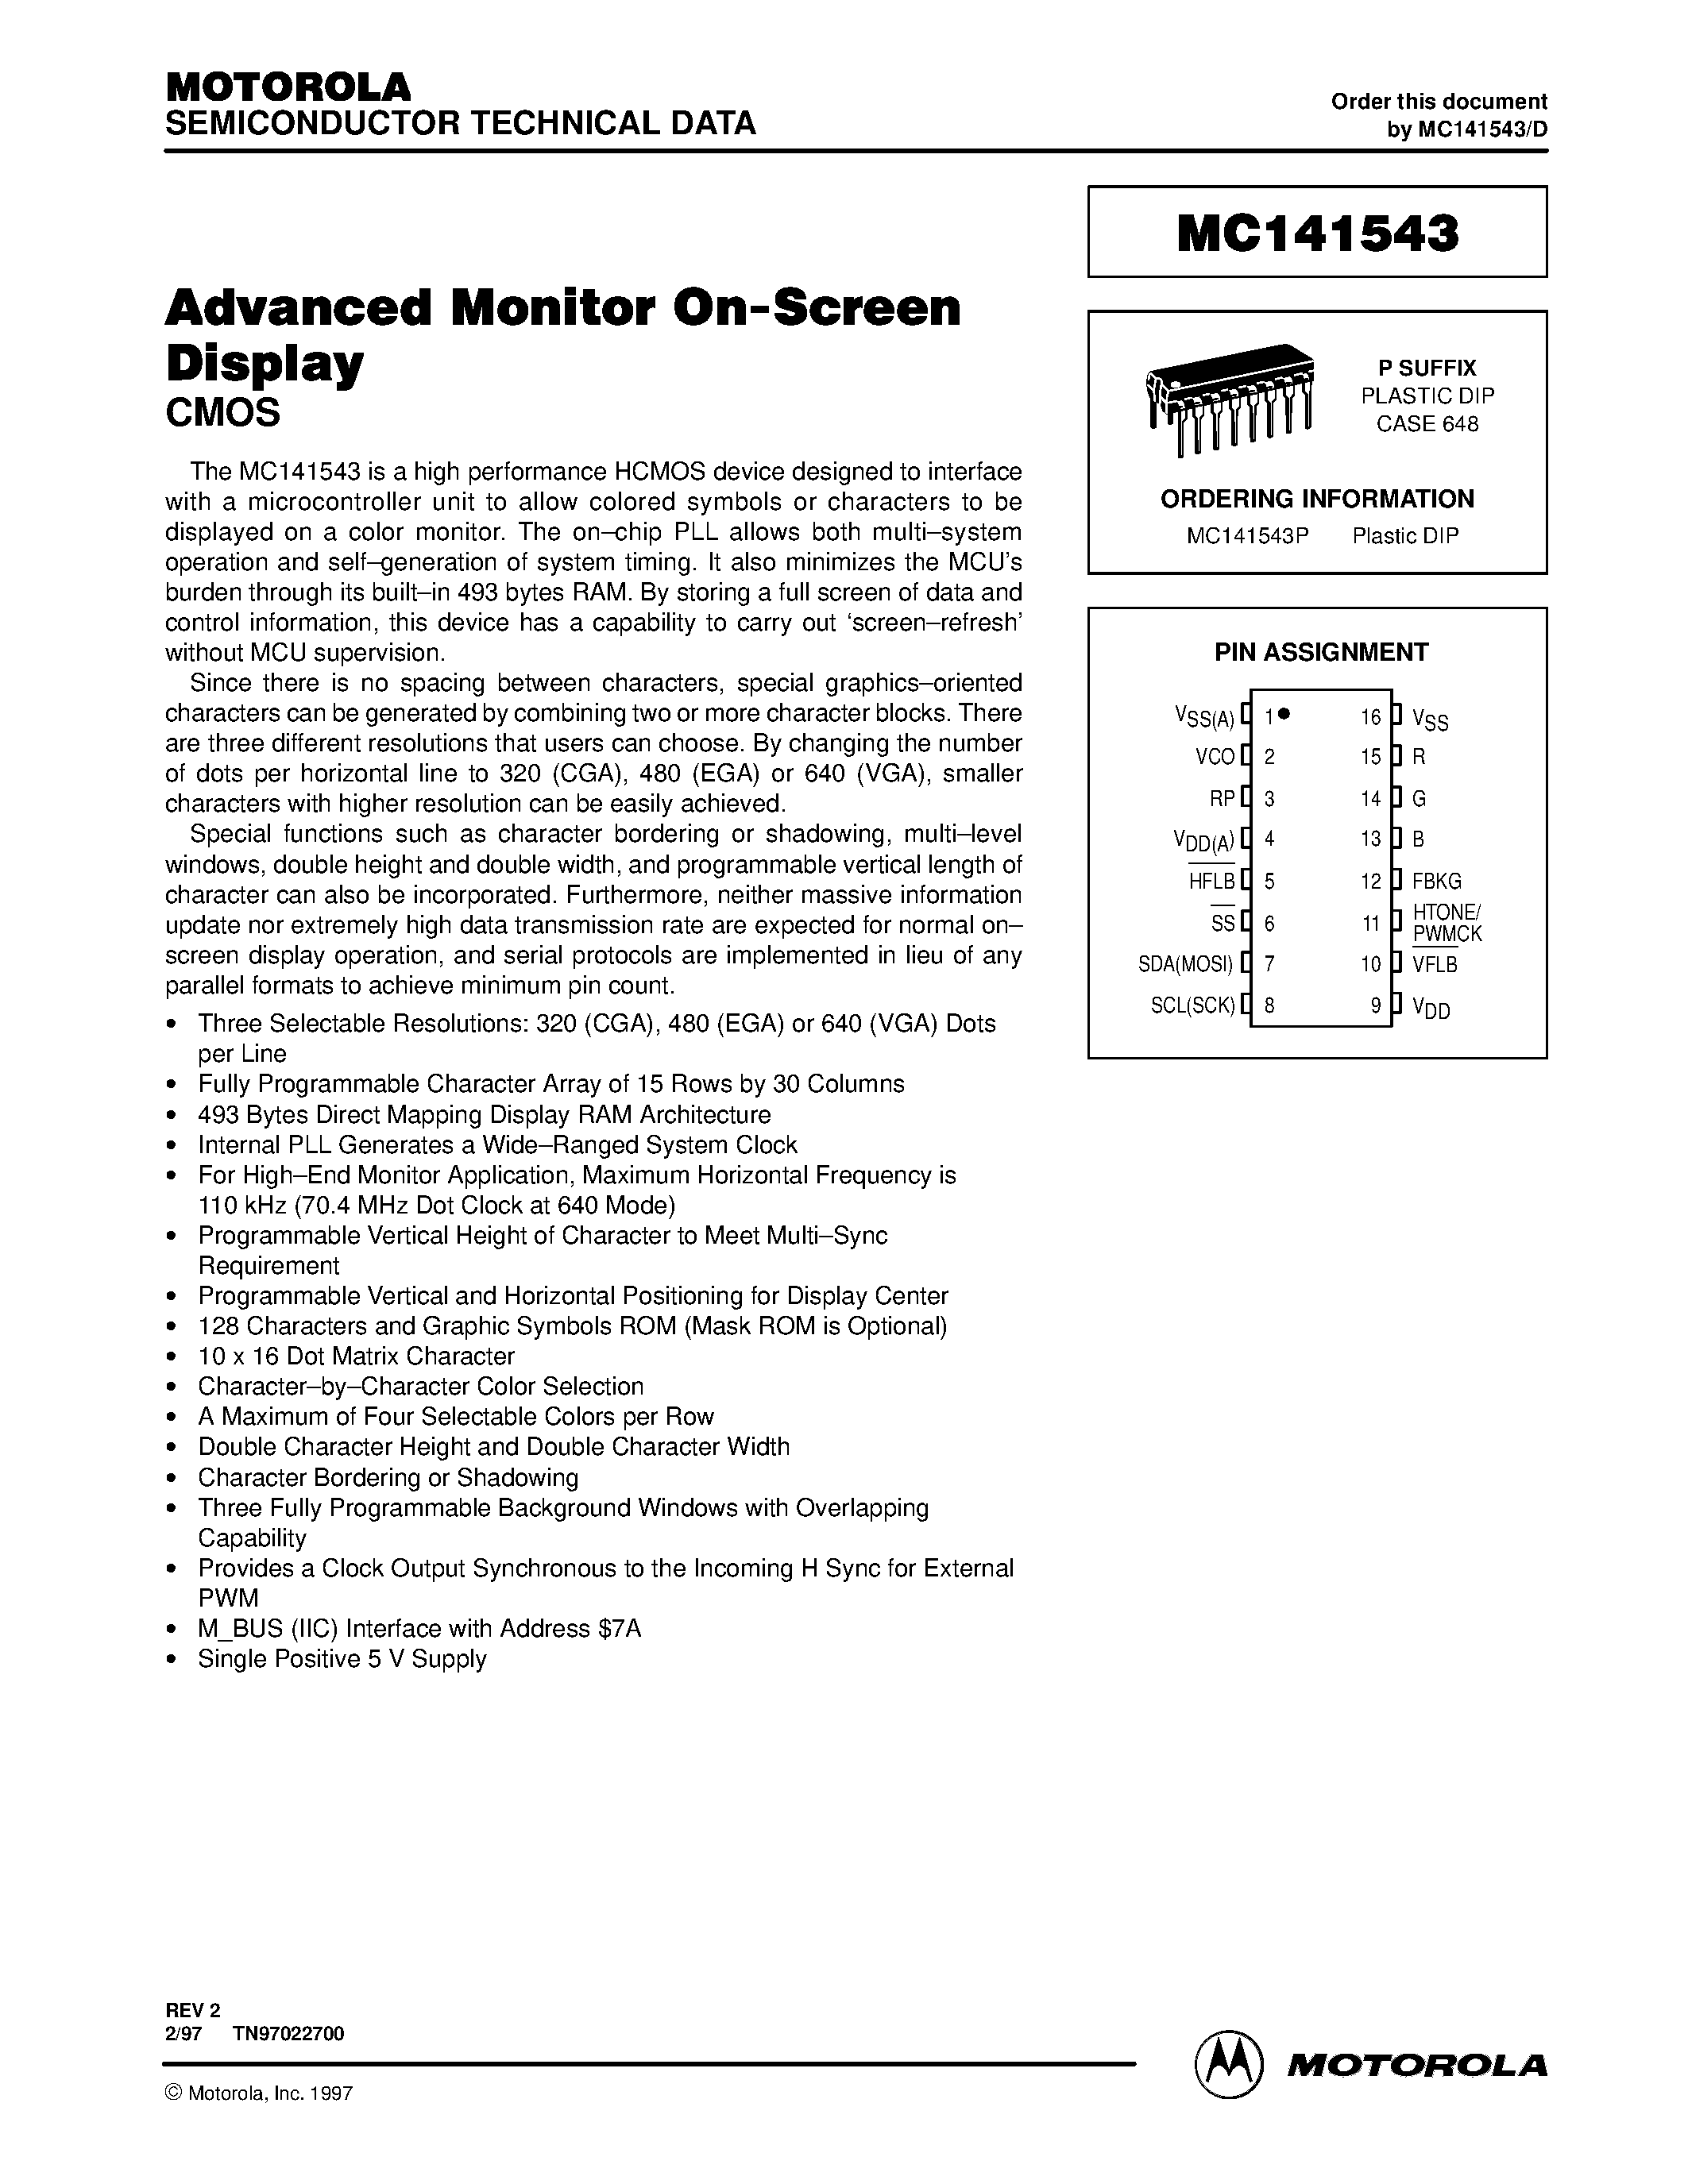 Datasheet MC141543 - Advanced Monitor On-Screen Display page 1